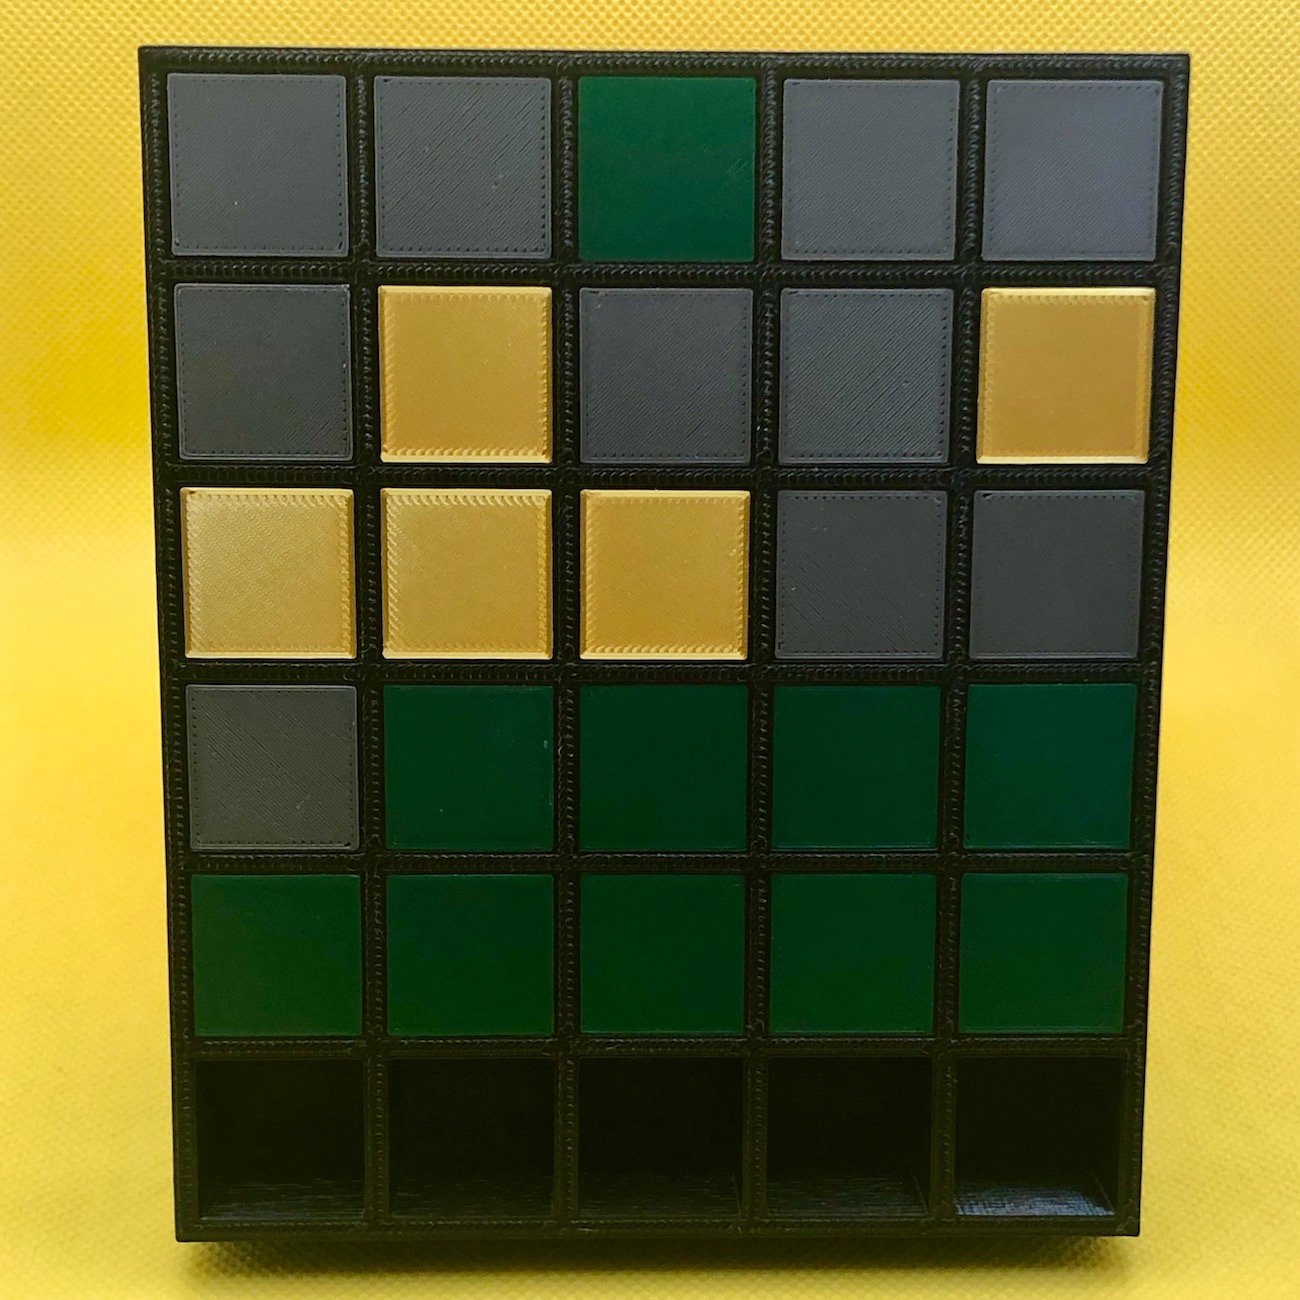 Wordle grid for calibration cubes